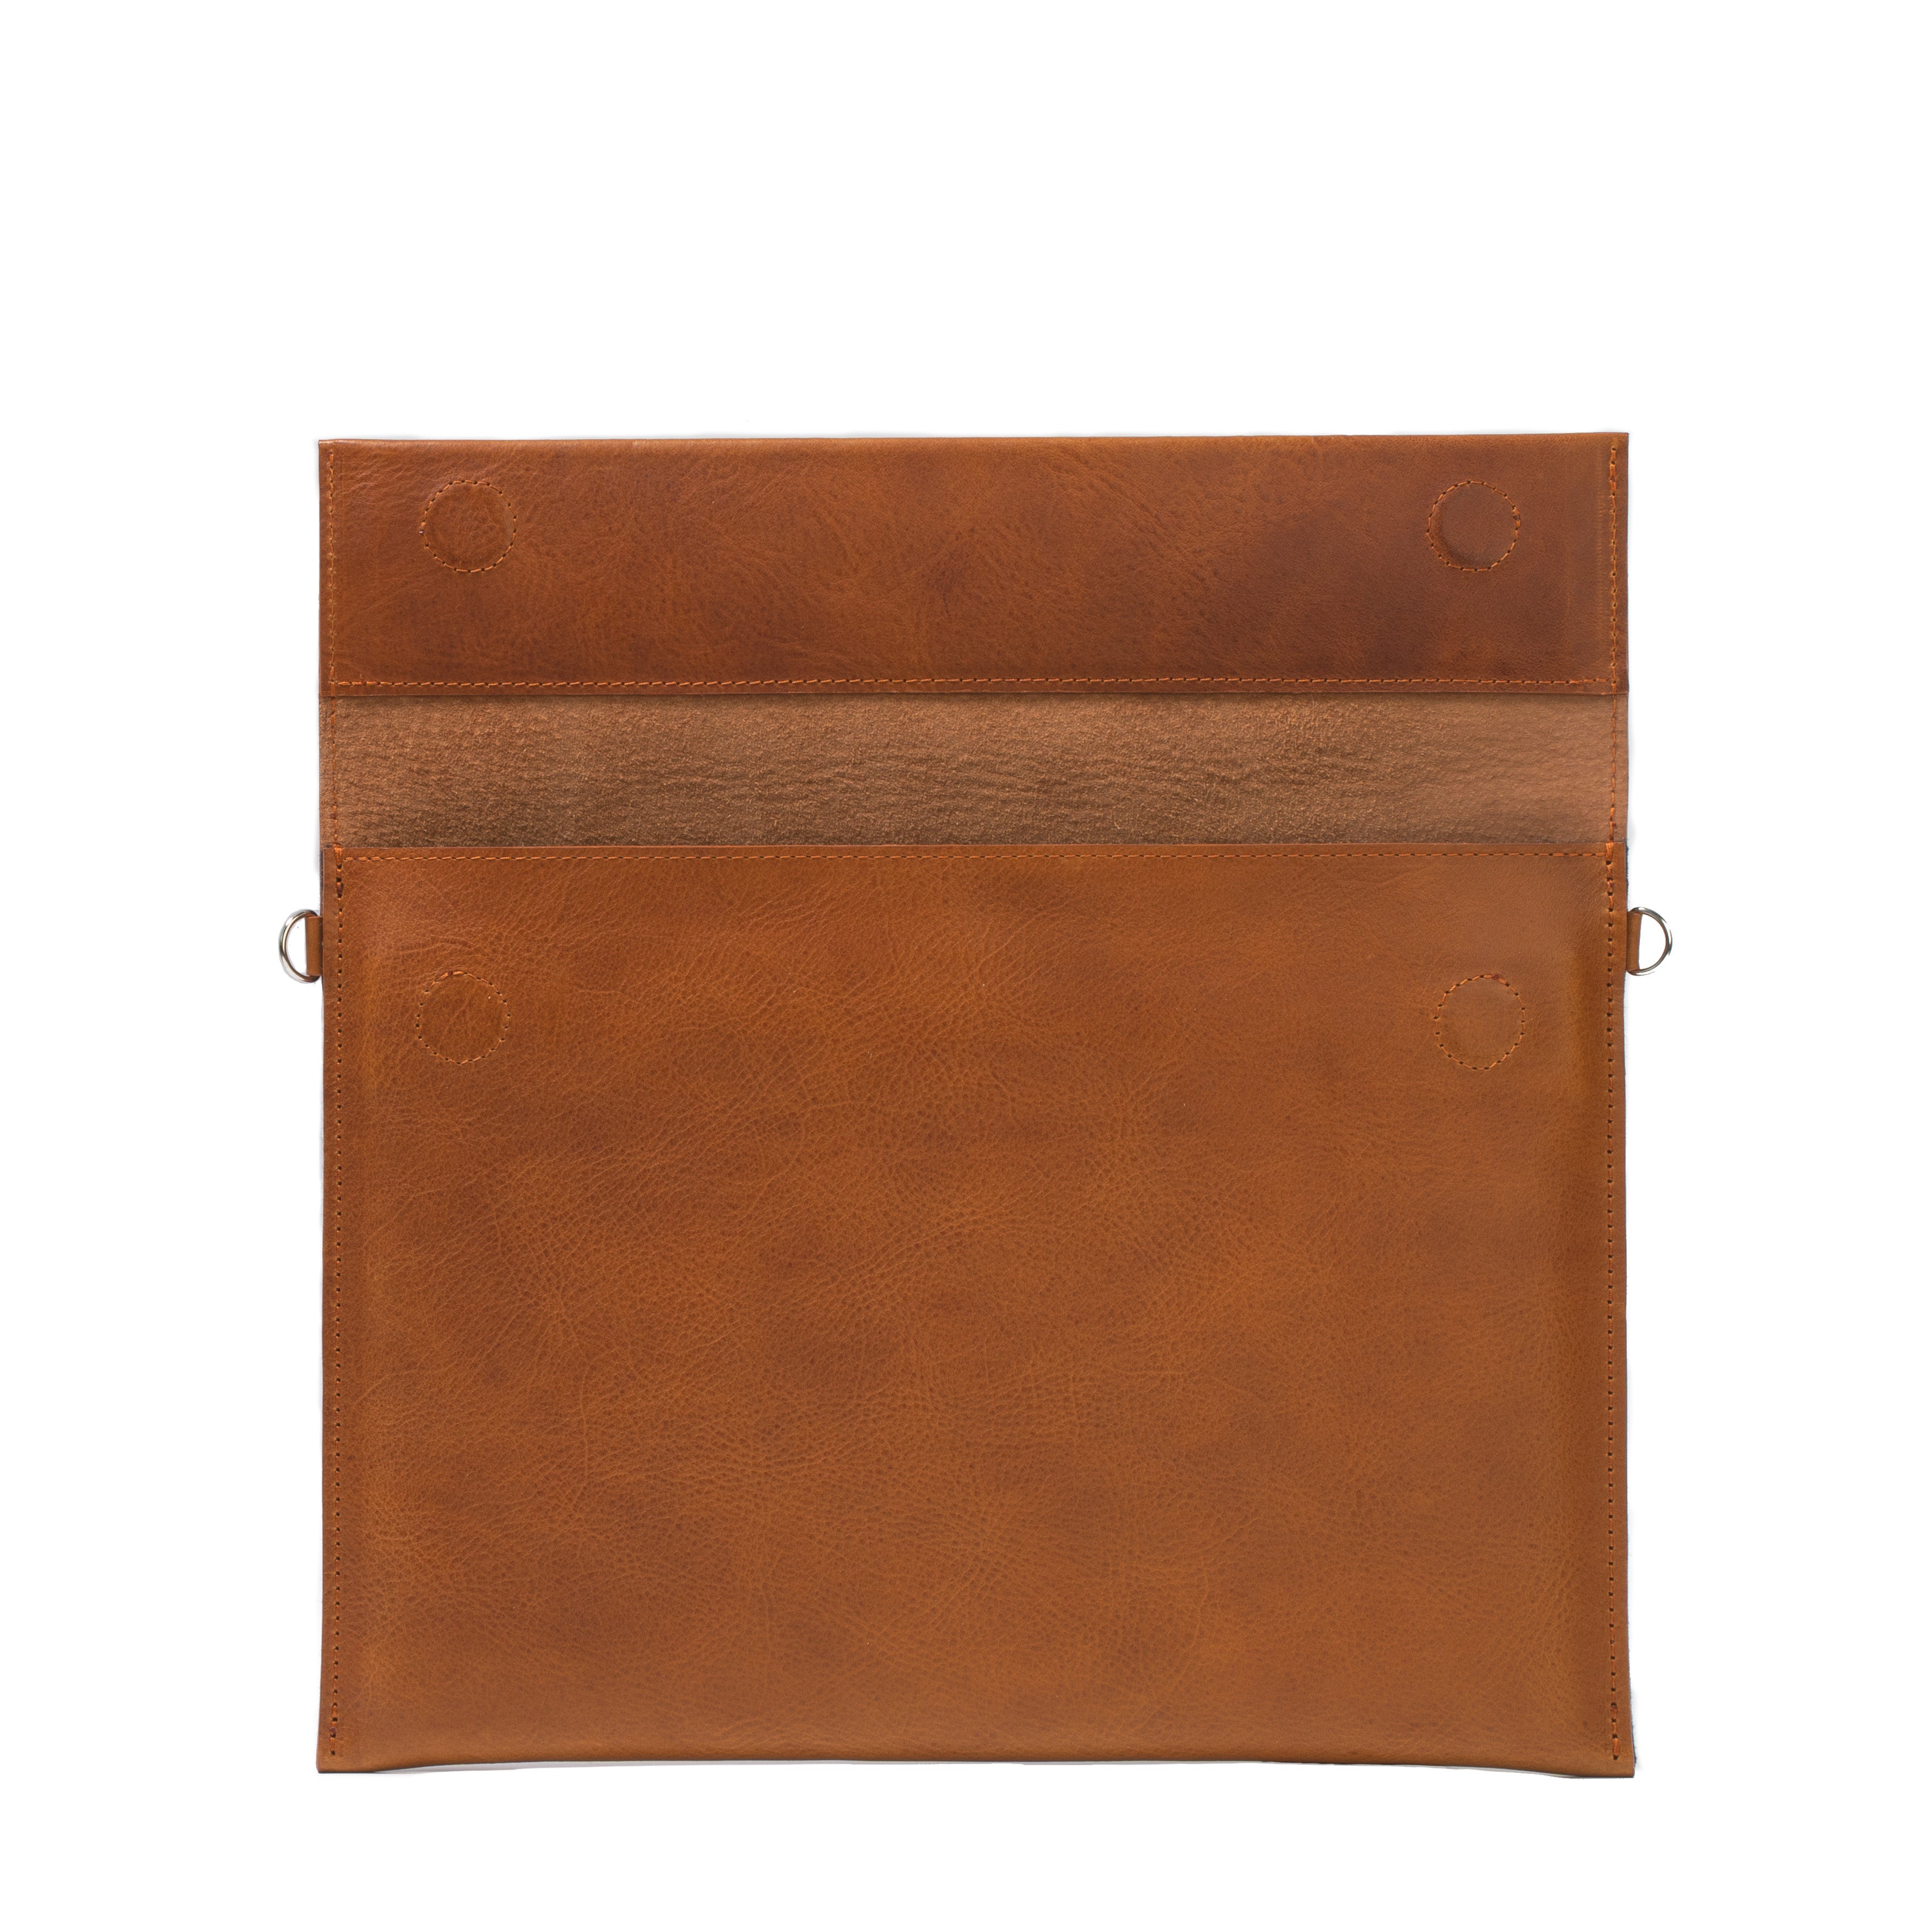 Premium MacBook leather case for all 13